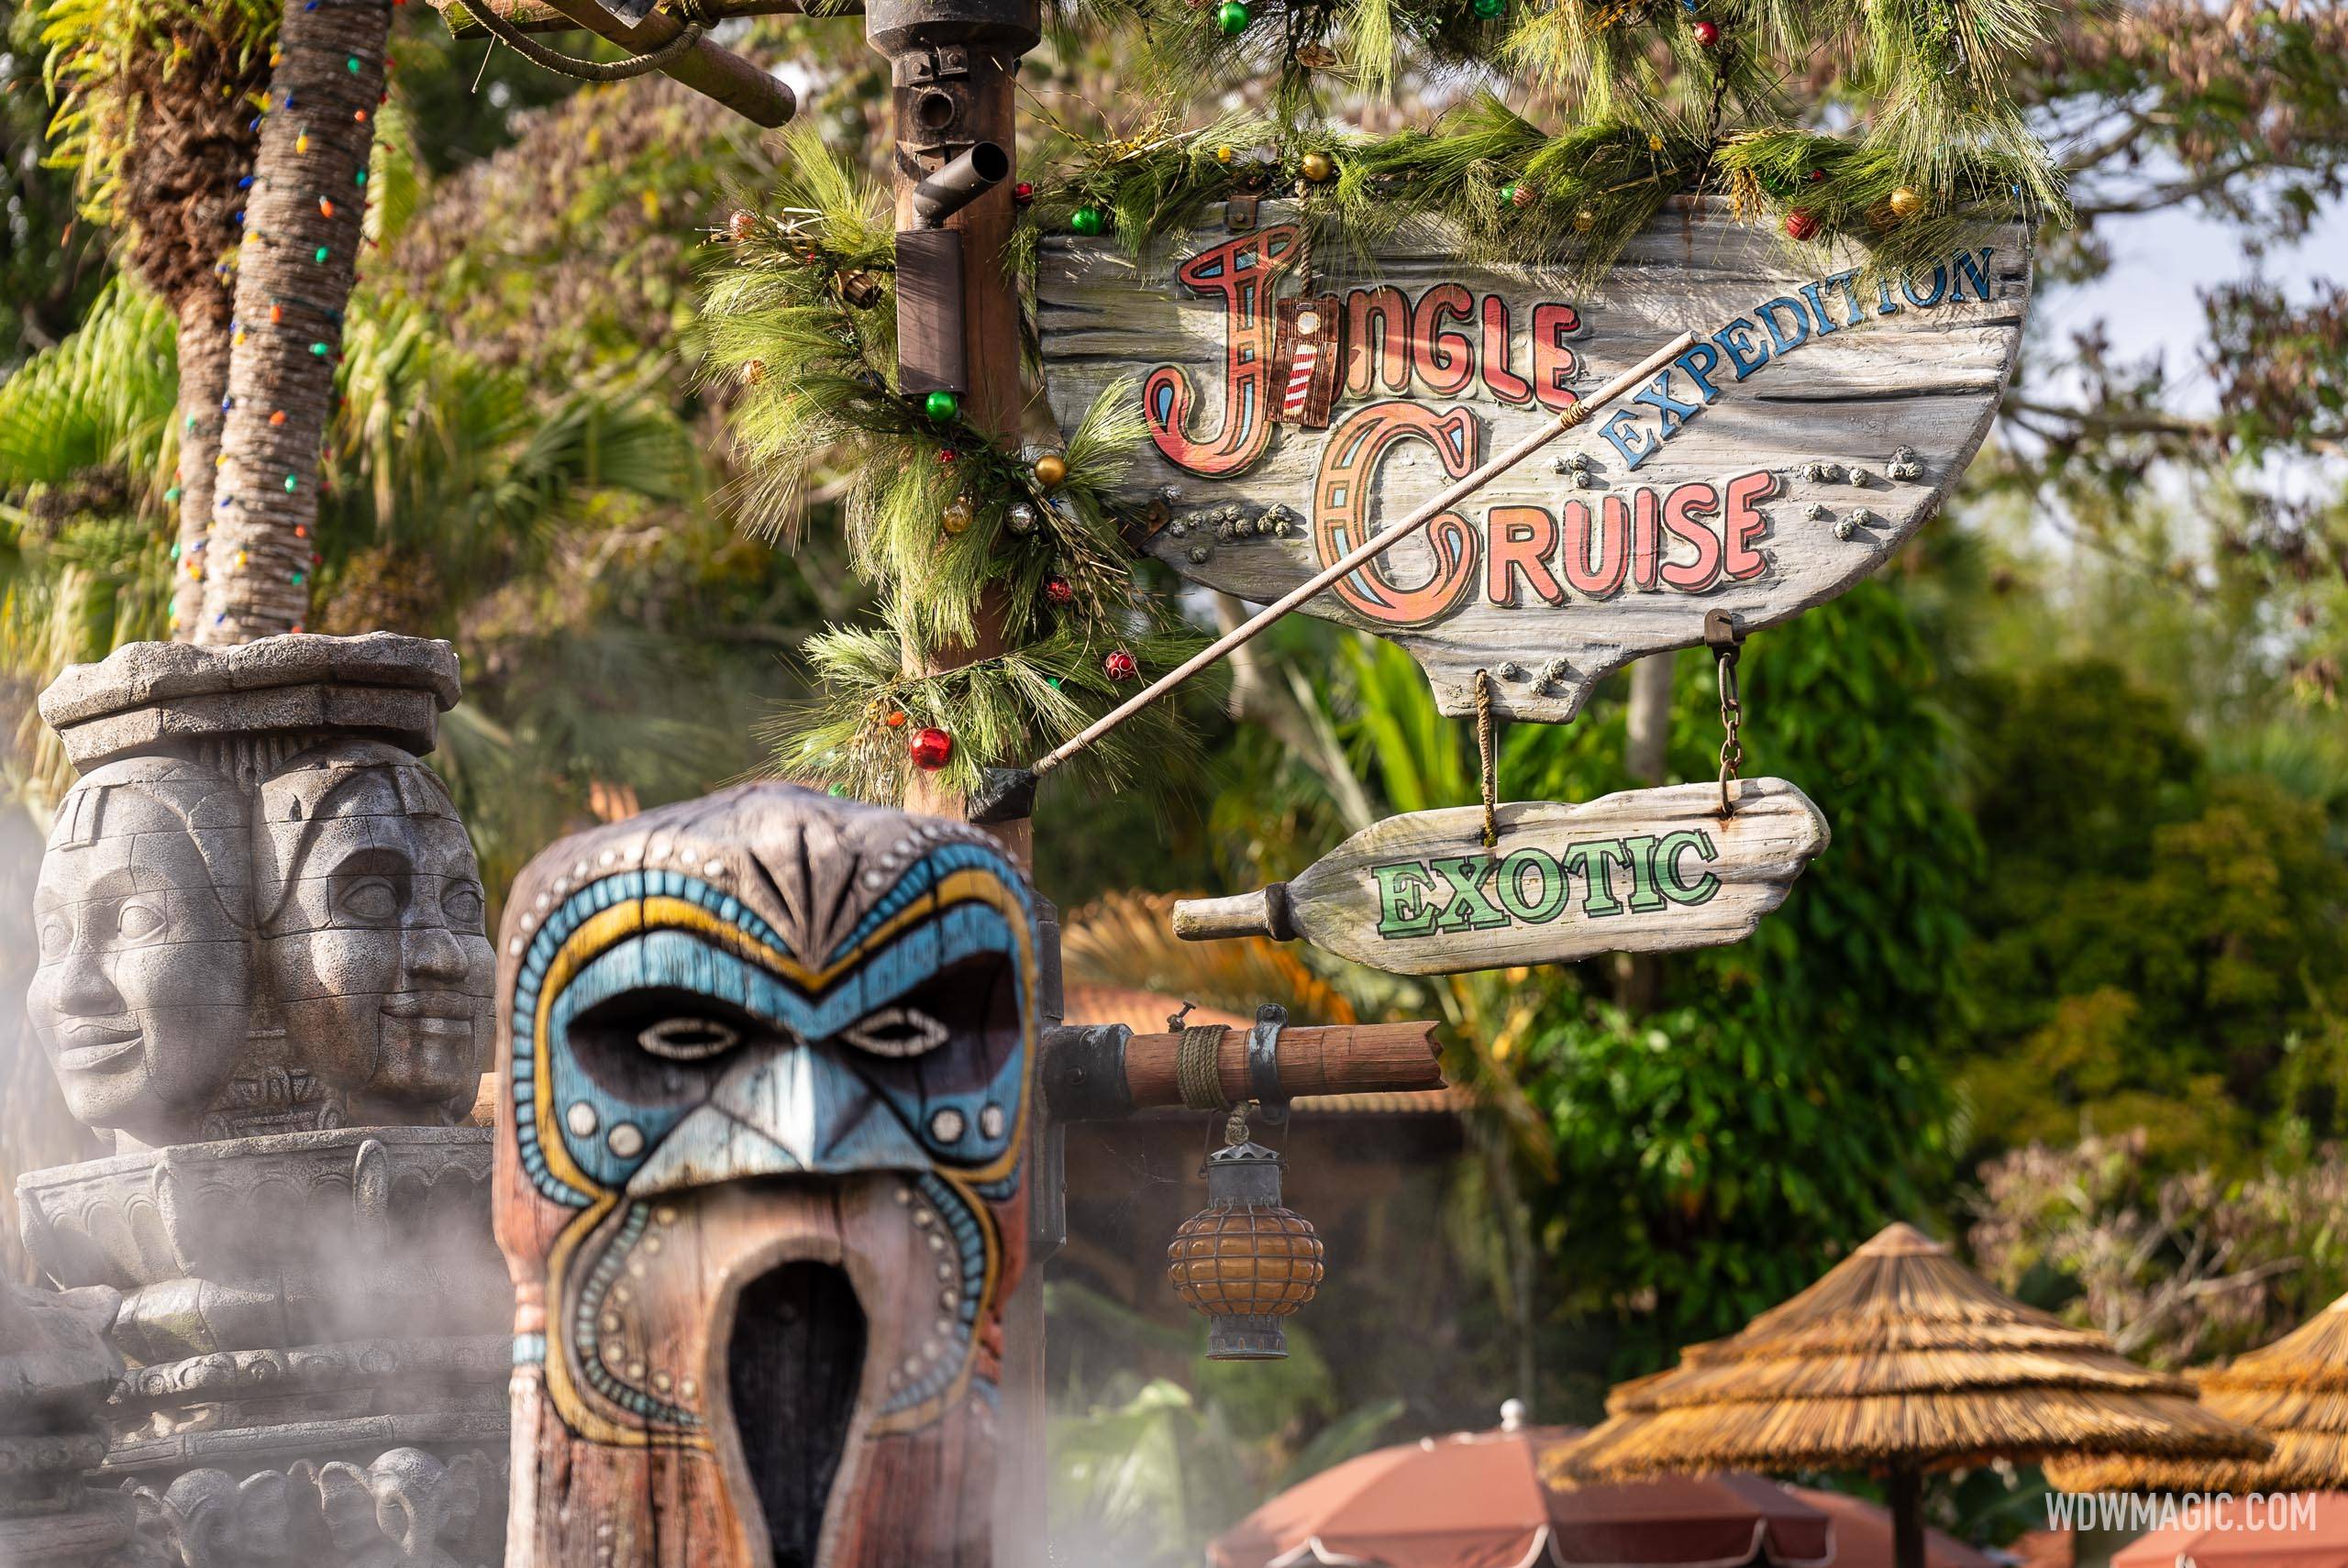 All Aboard the Jingle Cruise: Disney's seasonal spin on the World famous Jungle Cruise